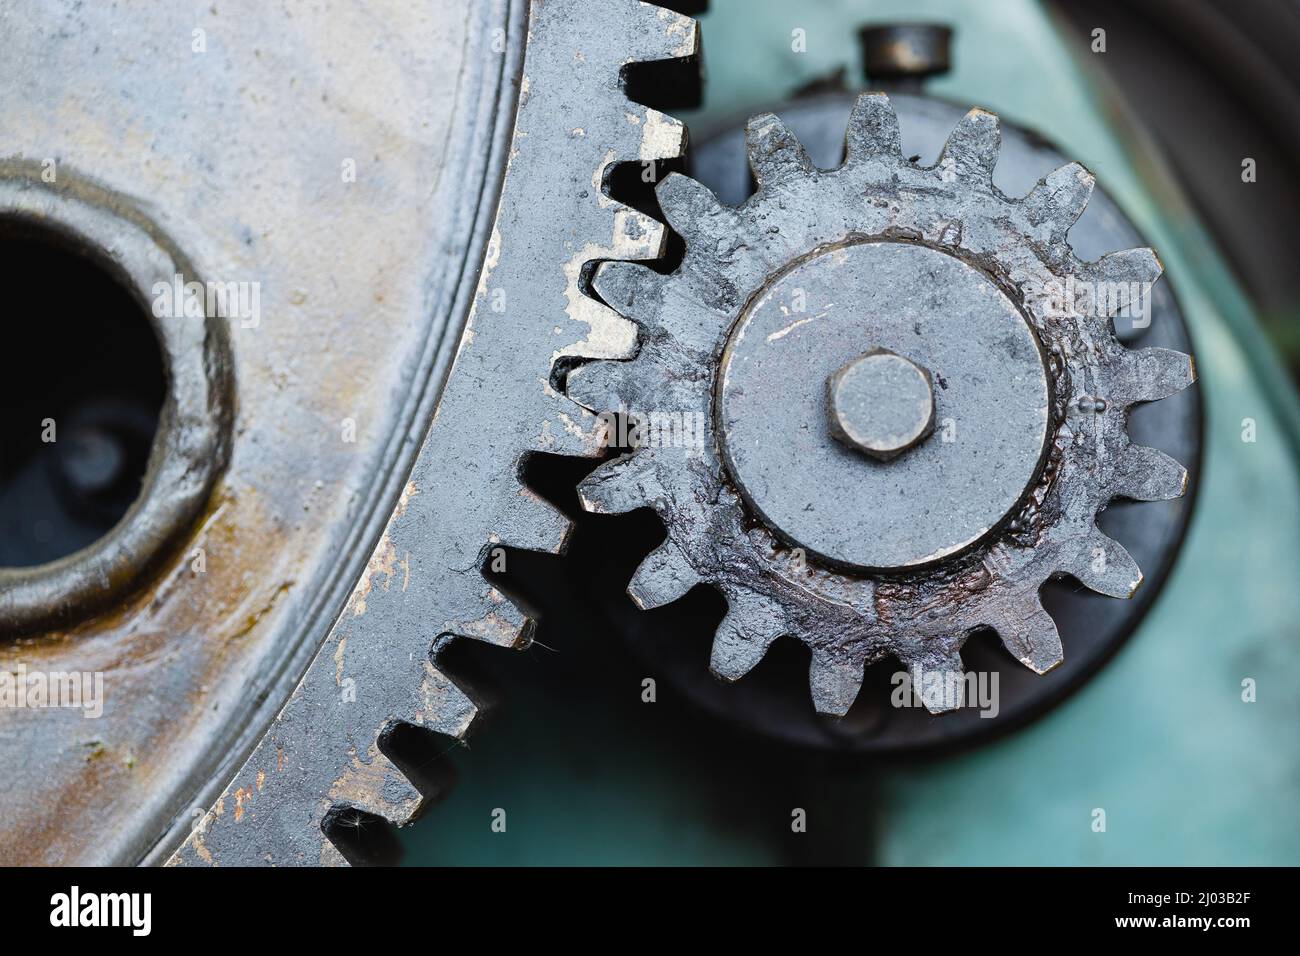 Metal gear cogwheel in steel heavy industry machine with dirty grease oil lube Stock Photo